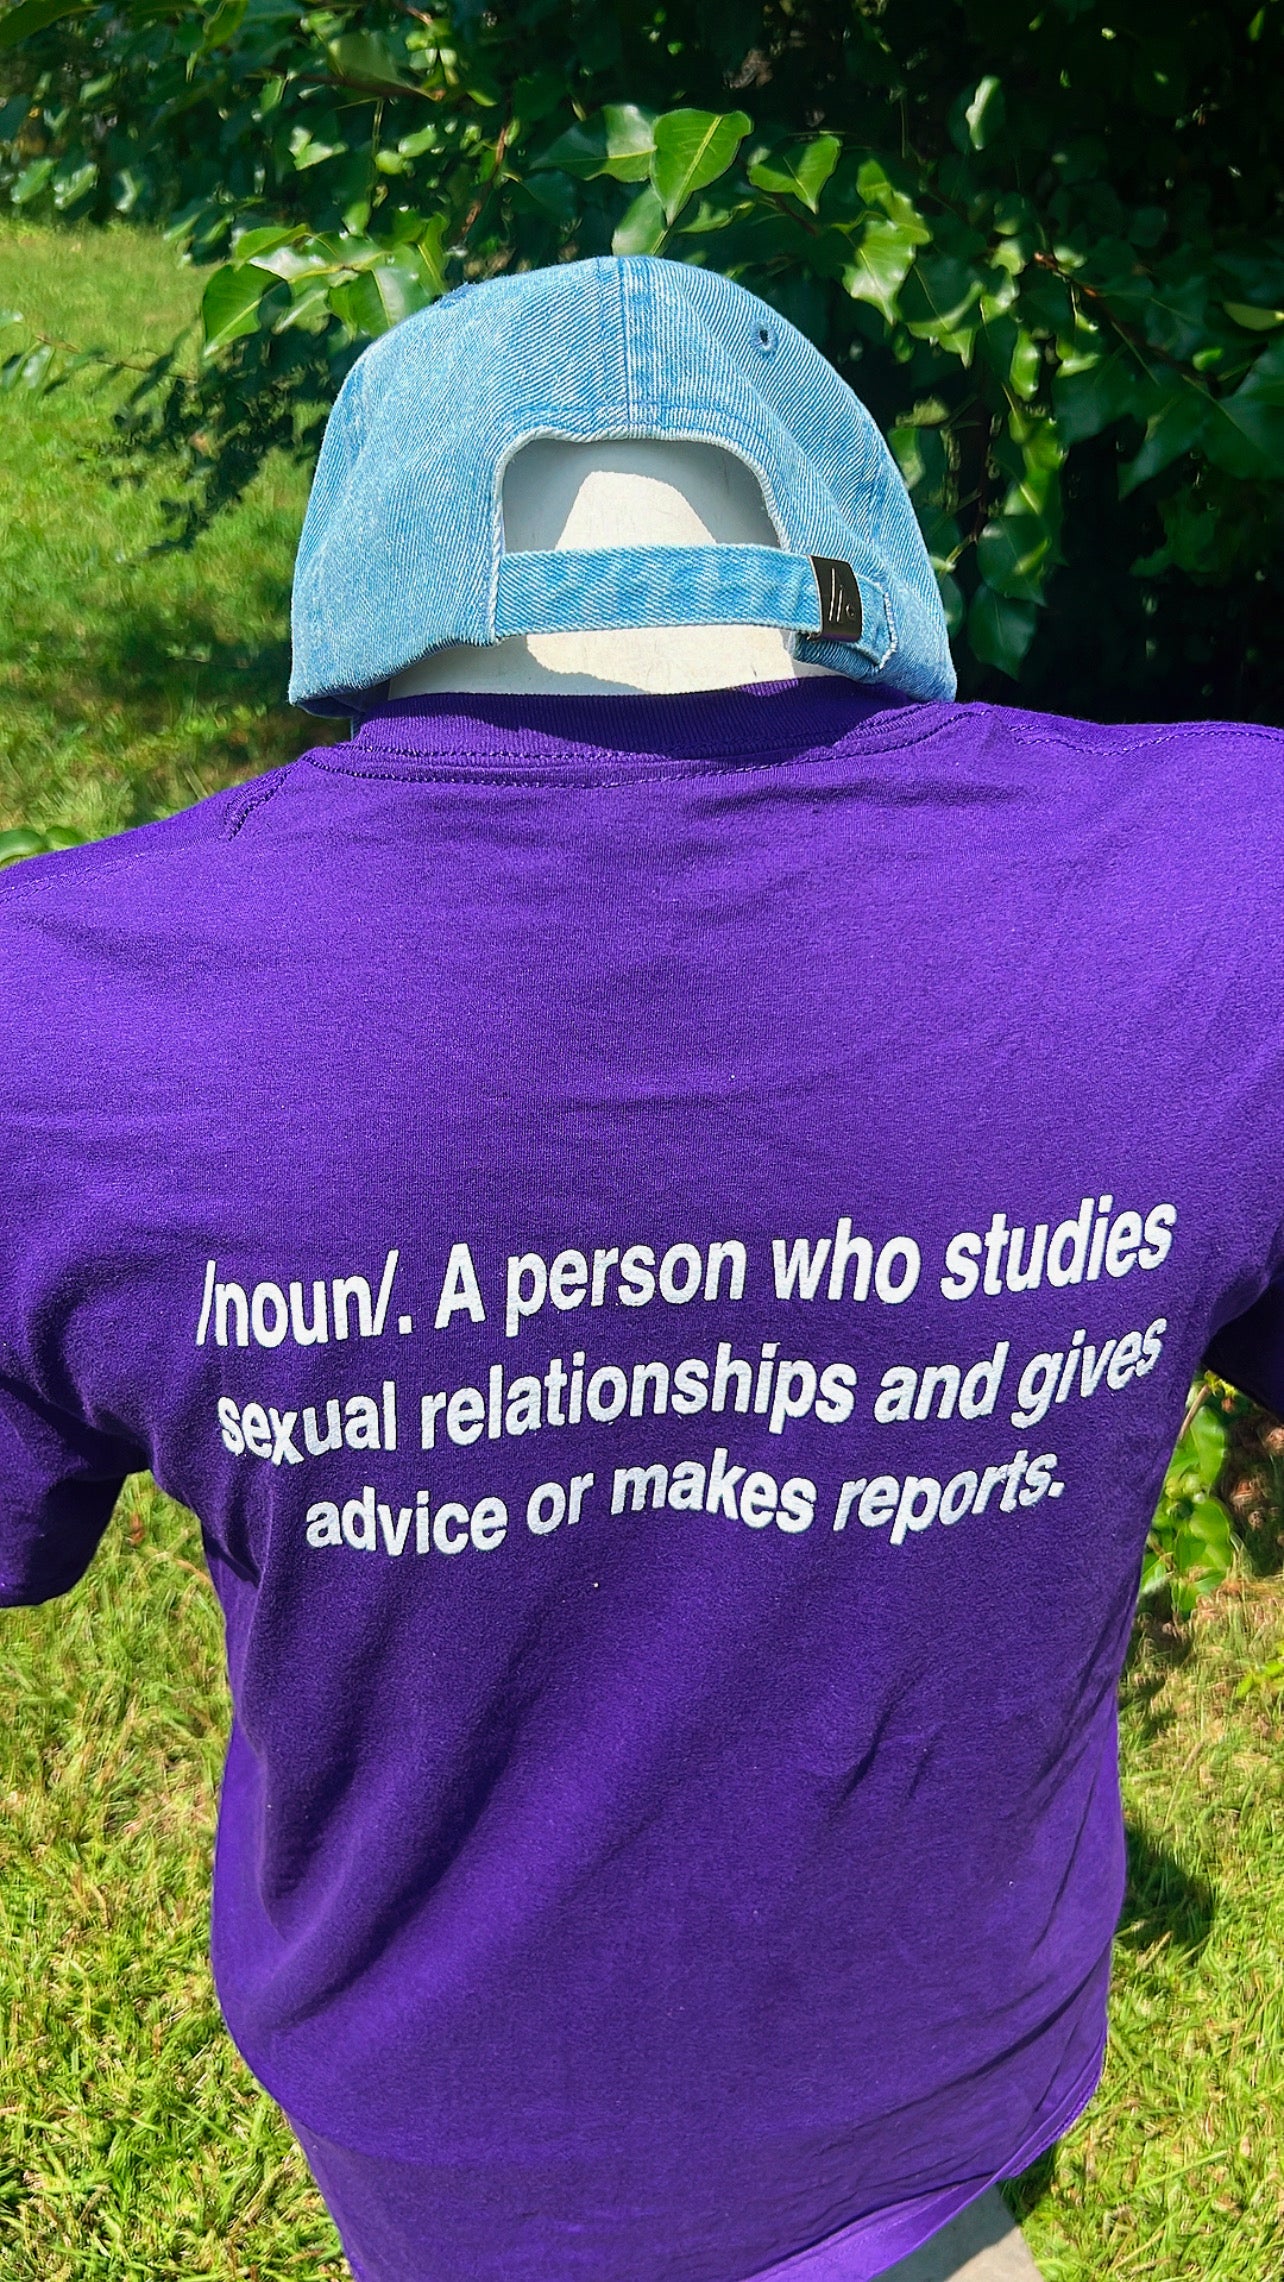 Unisex purple Sexual Intellectual t-shirt